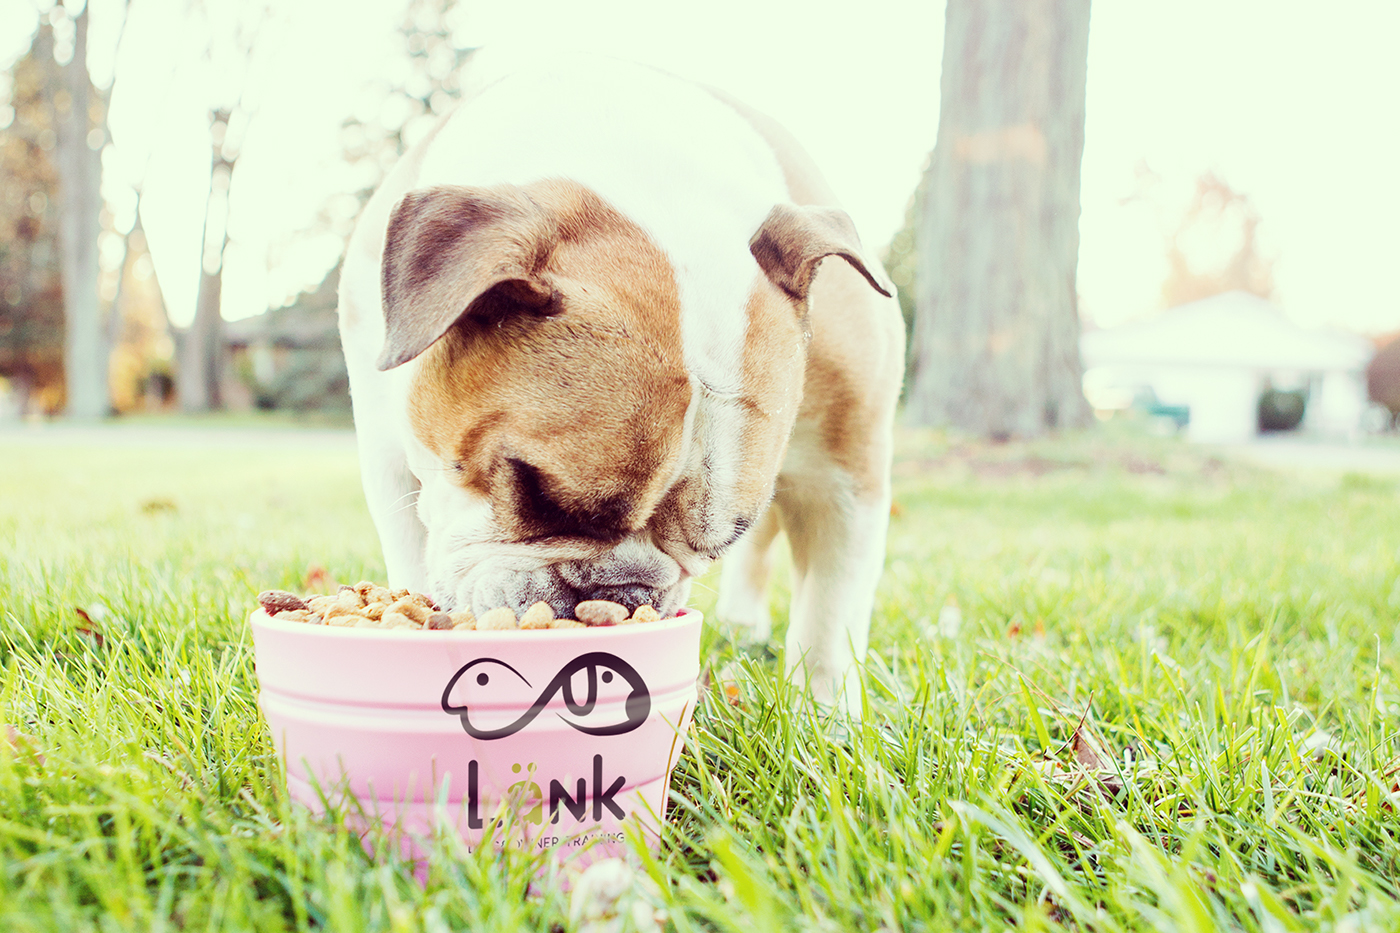 lank logo dog training Pet dmcreatividad